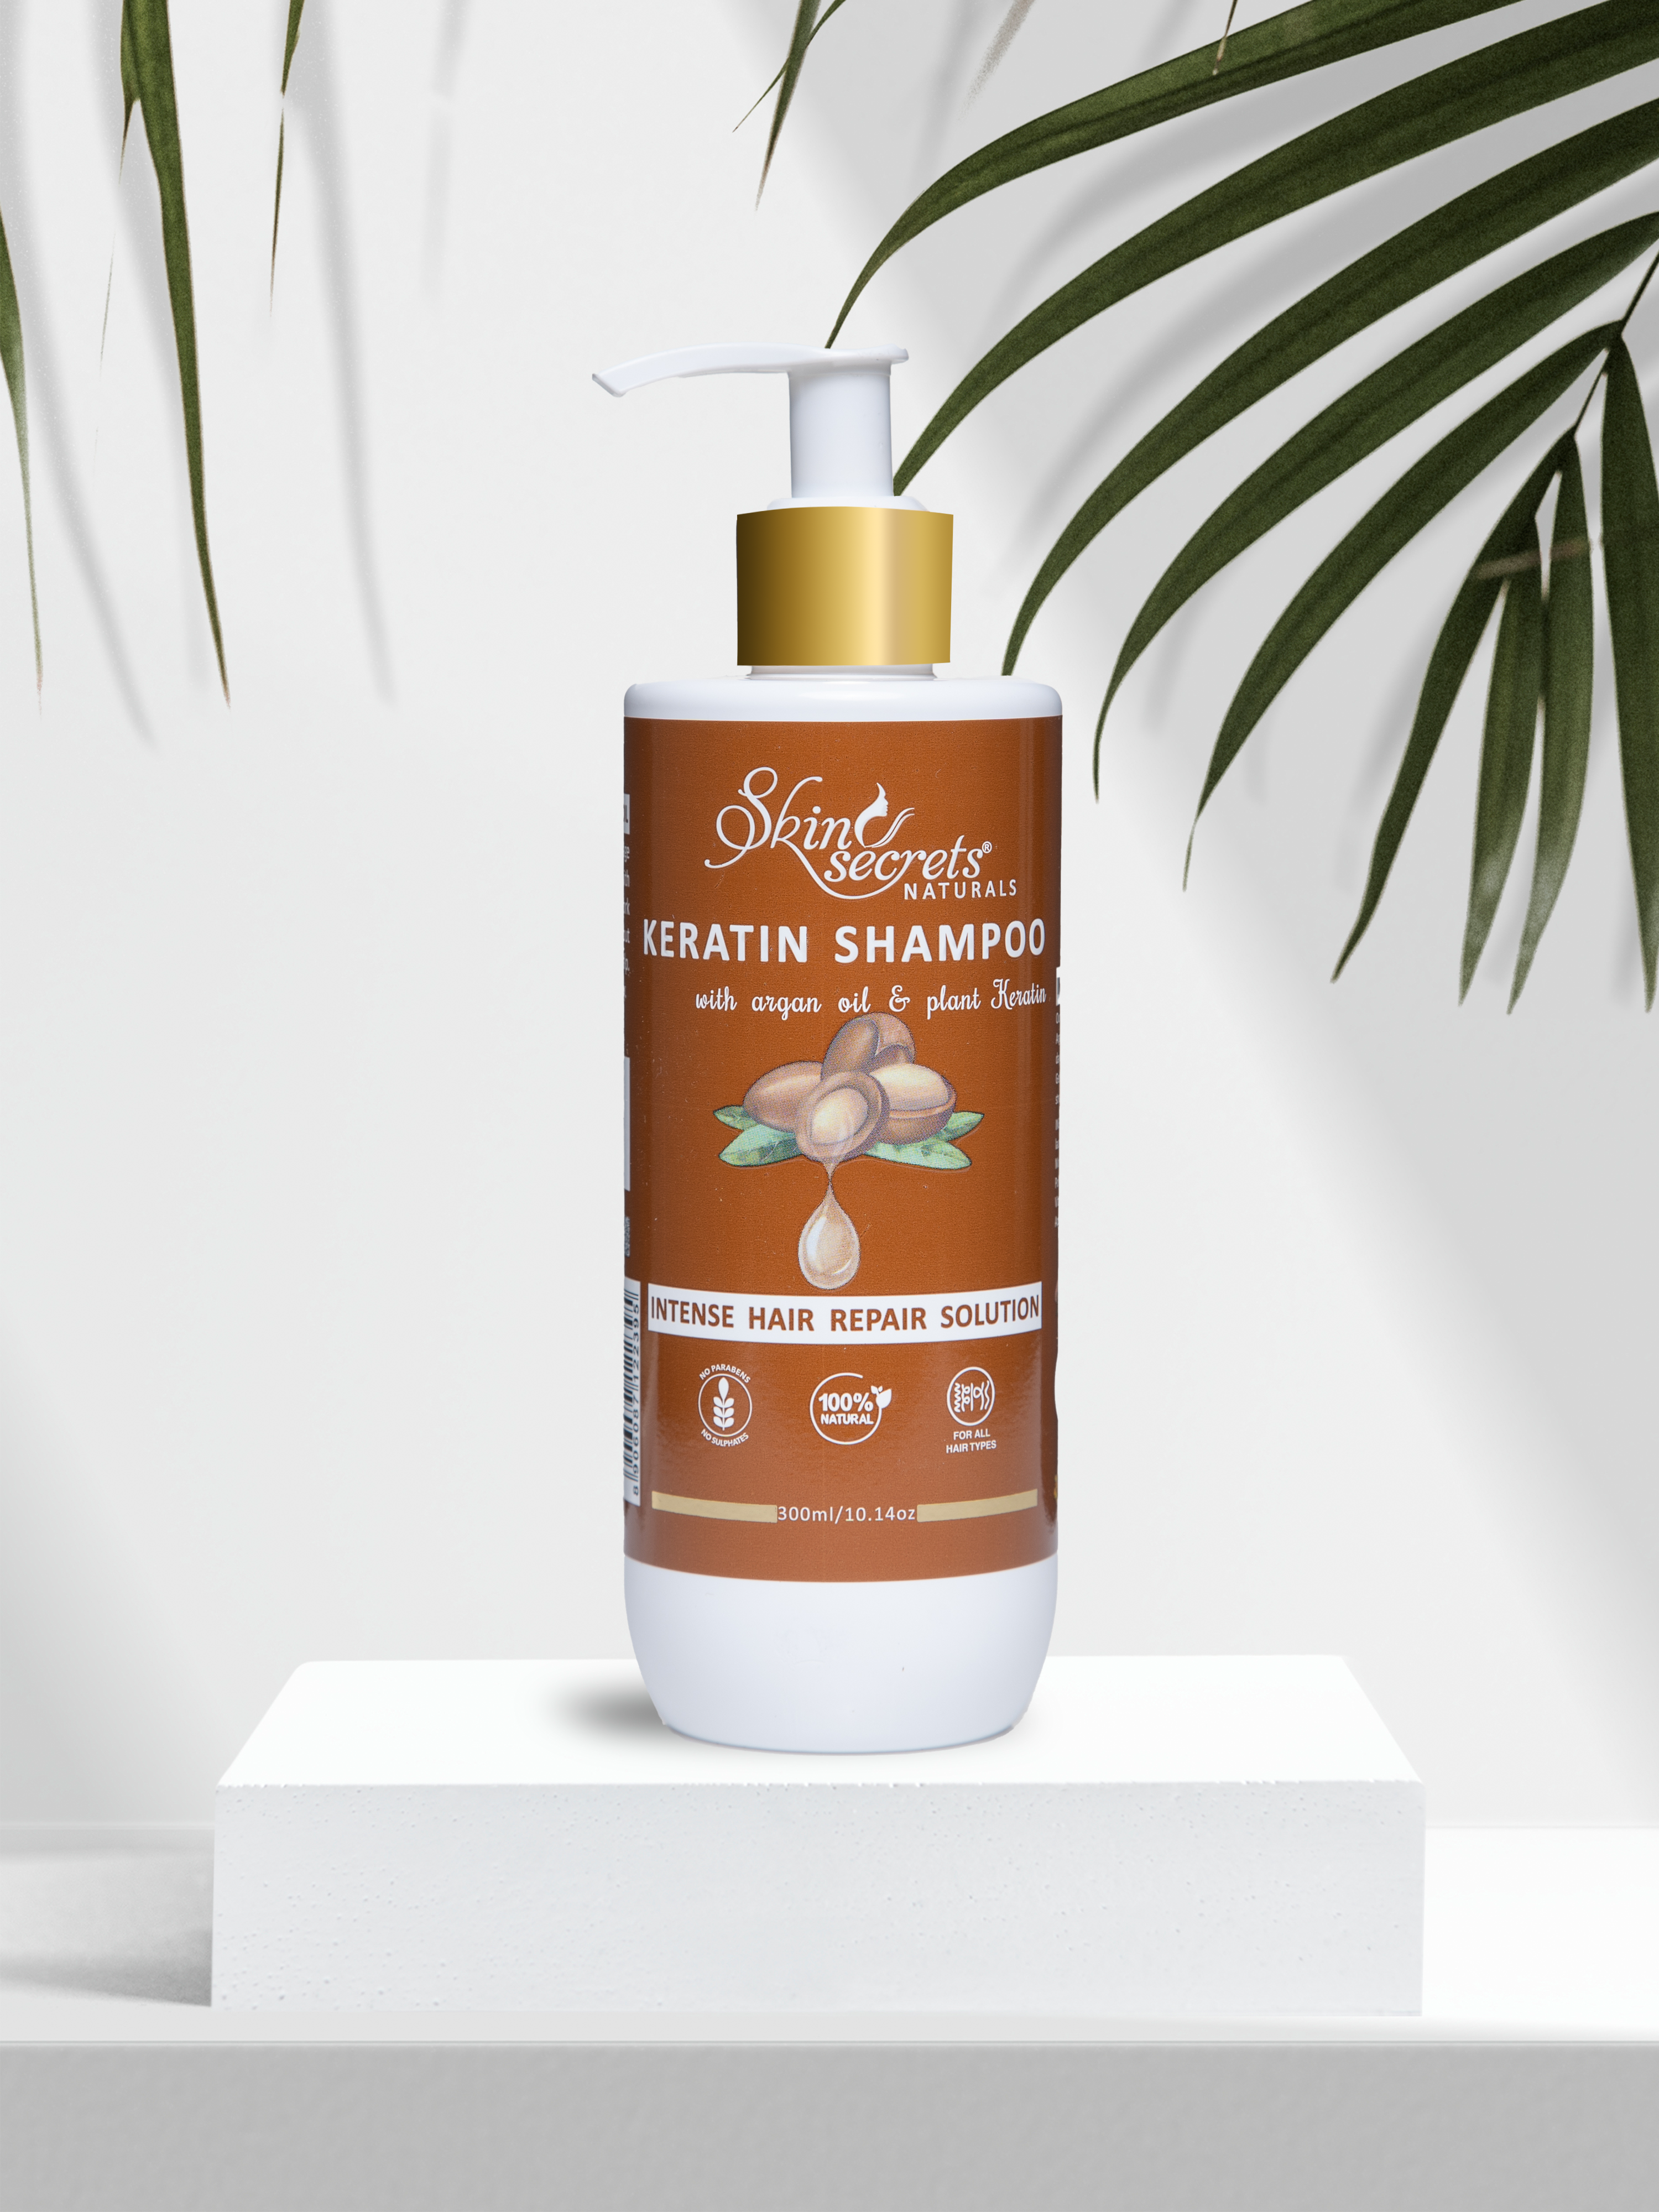 Argan Keratin Shampoo with Argan Oil For Damaged and Weak Hair| Paraben & Sulphate Free| 300ml